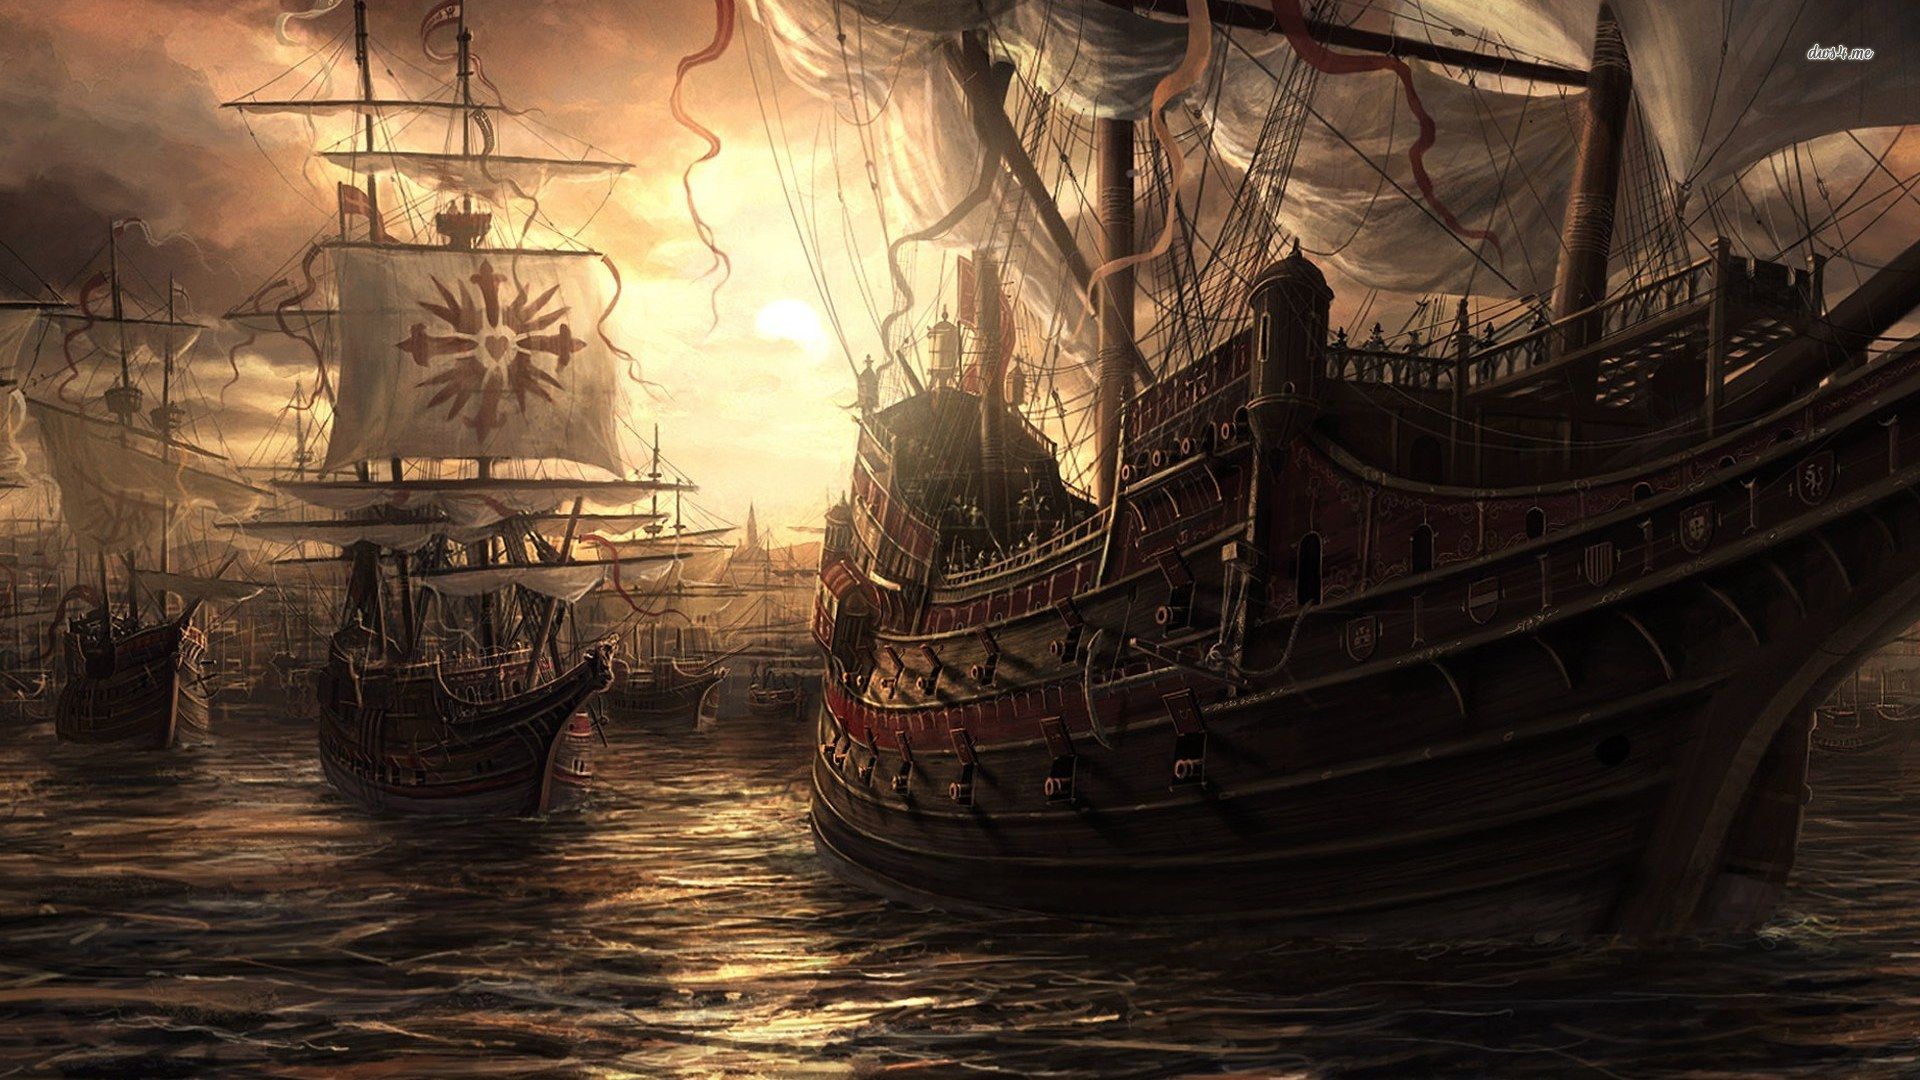 3035-pirate-ships-1920x1080-fantasy-wallpaper